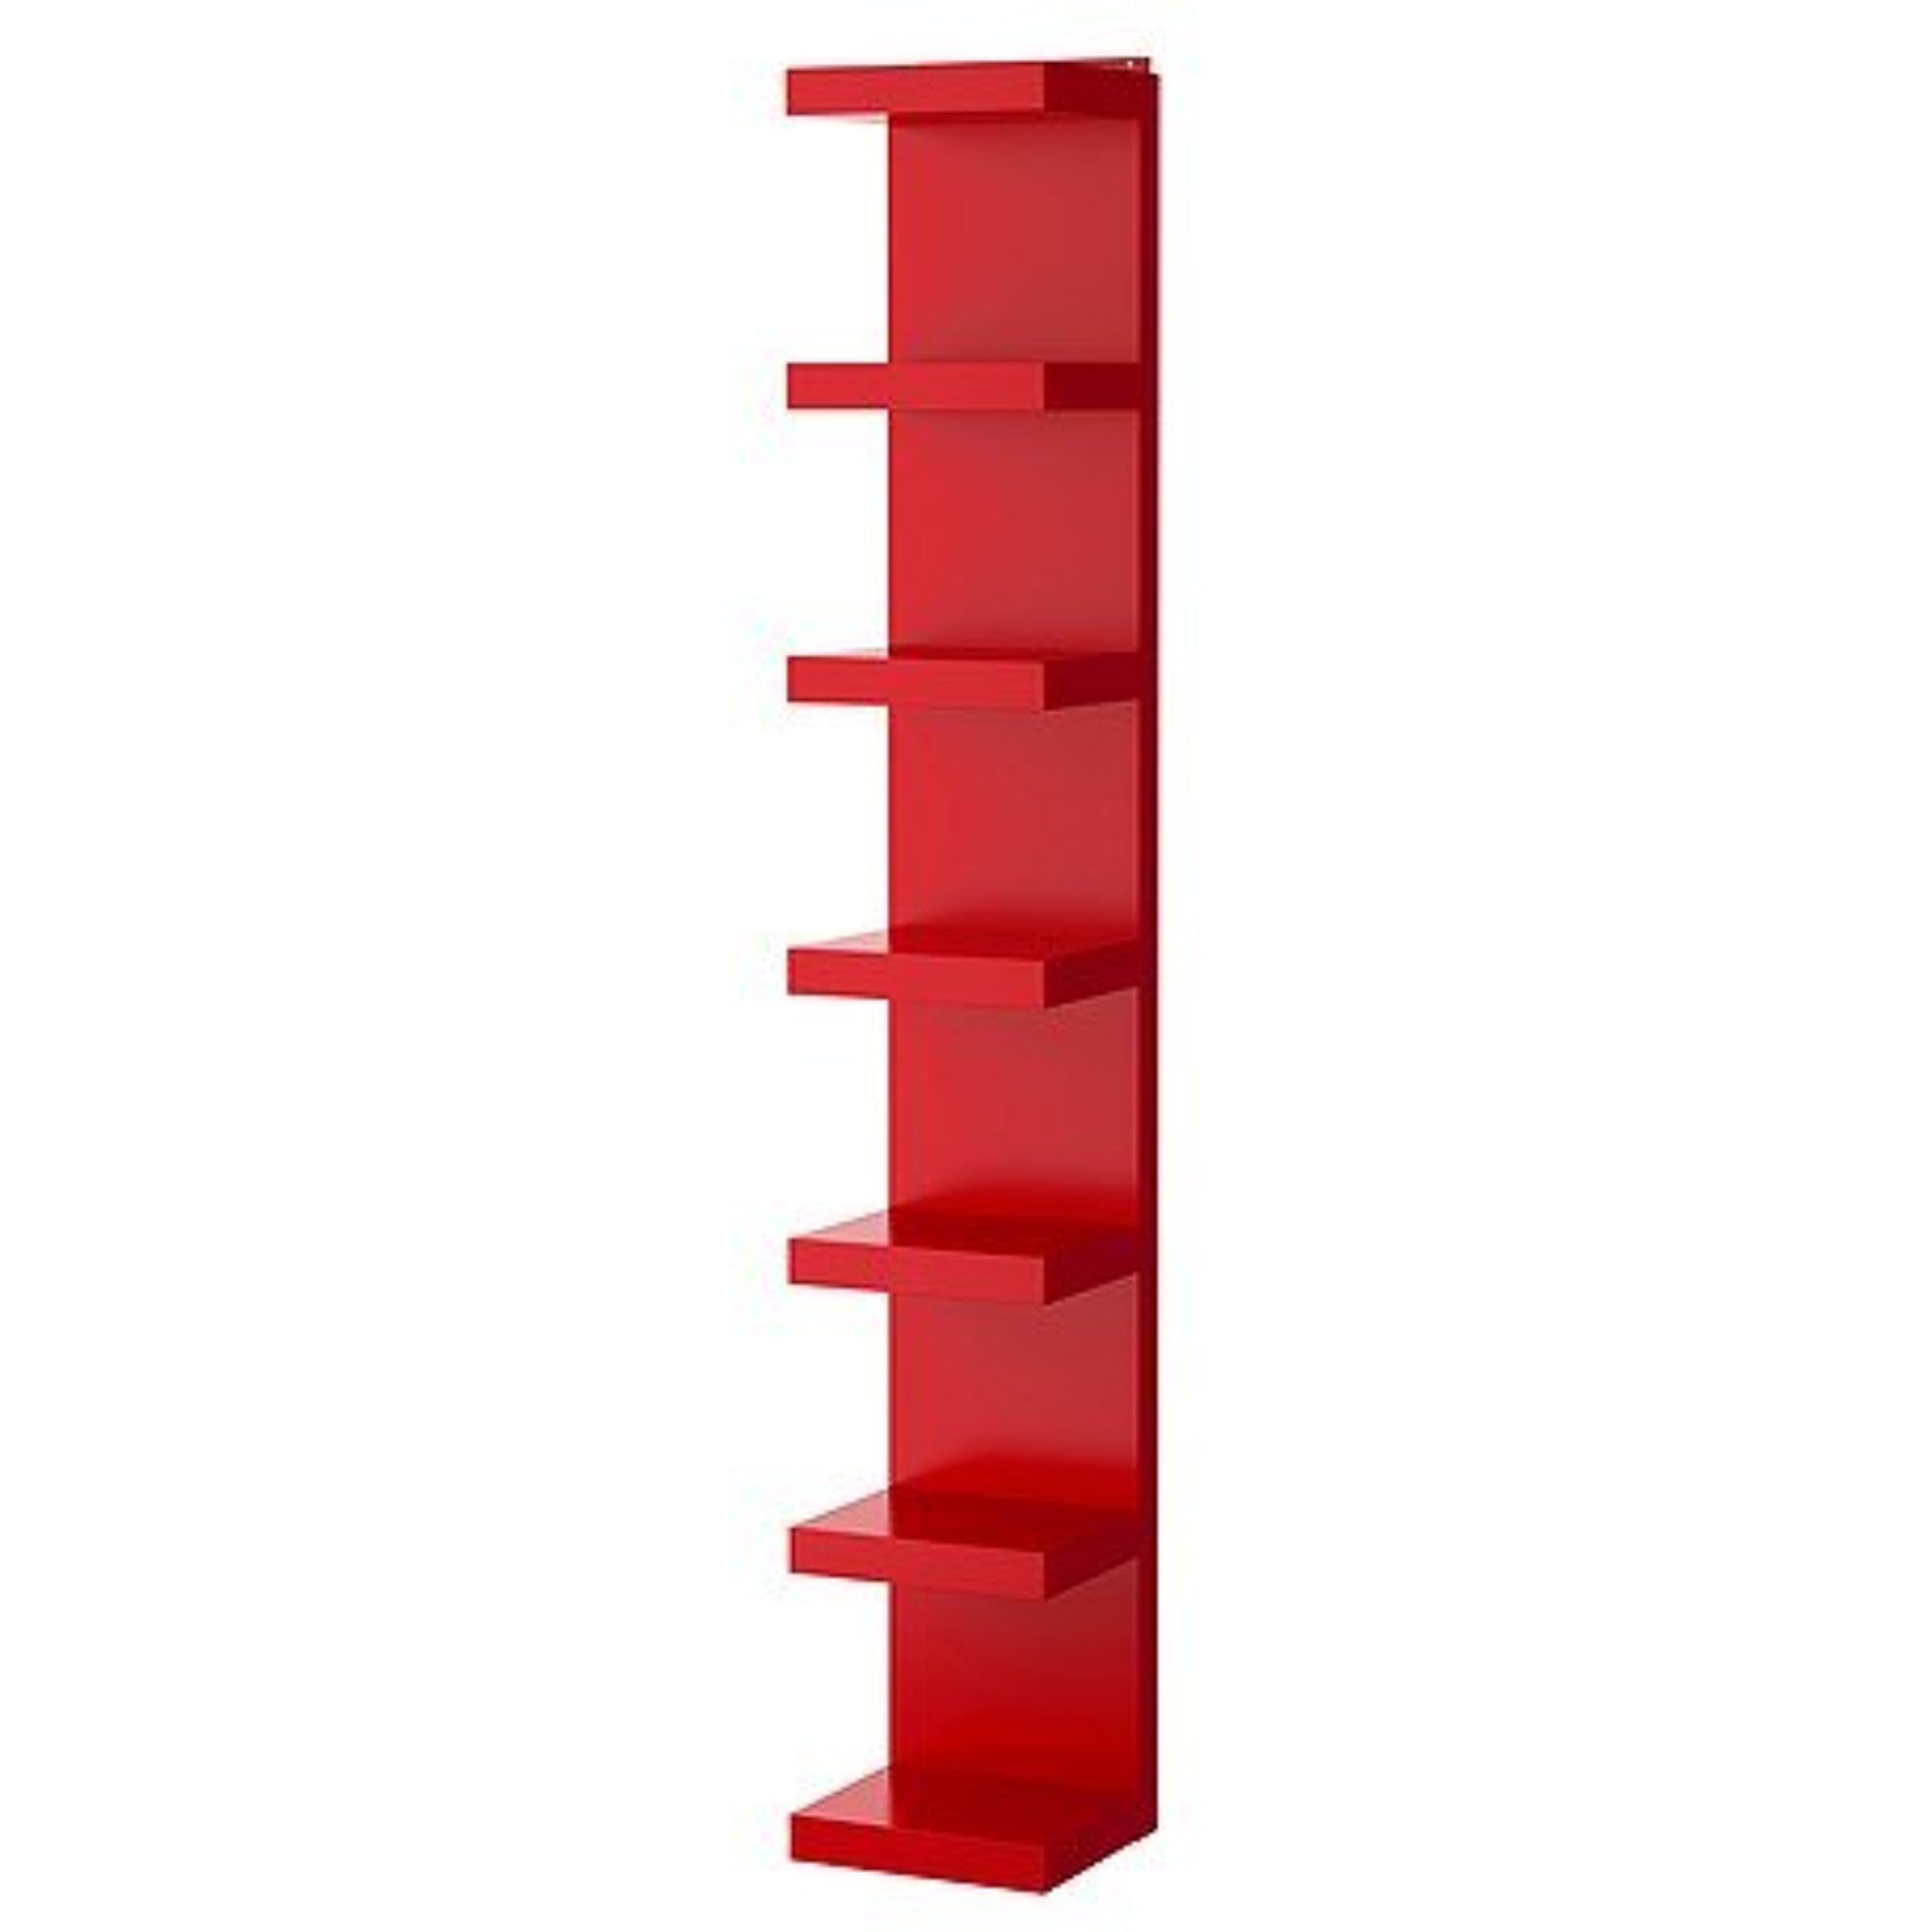 Ikea Wall Shelf Unit Red 11 3 4x74 4, Red Floating Shelves